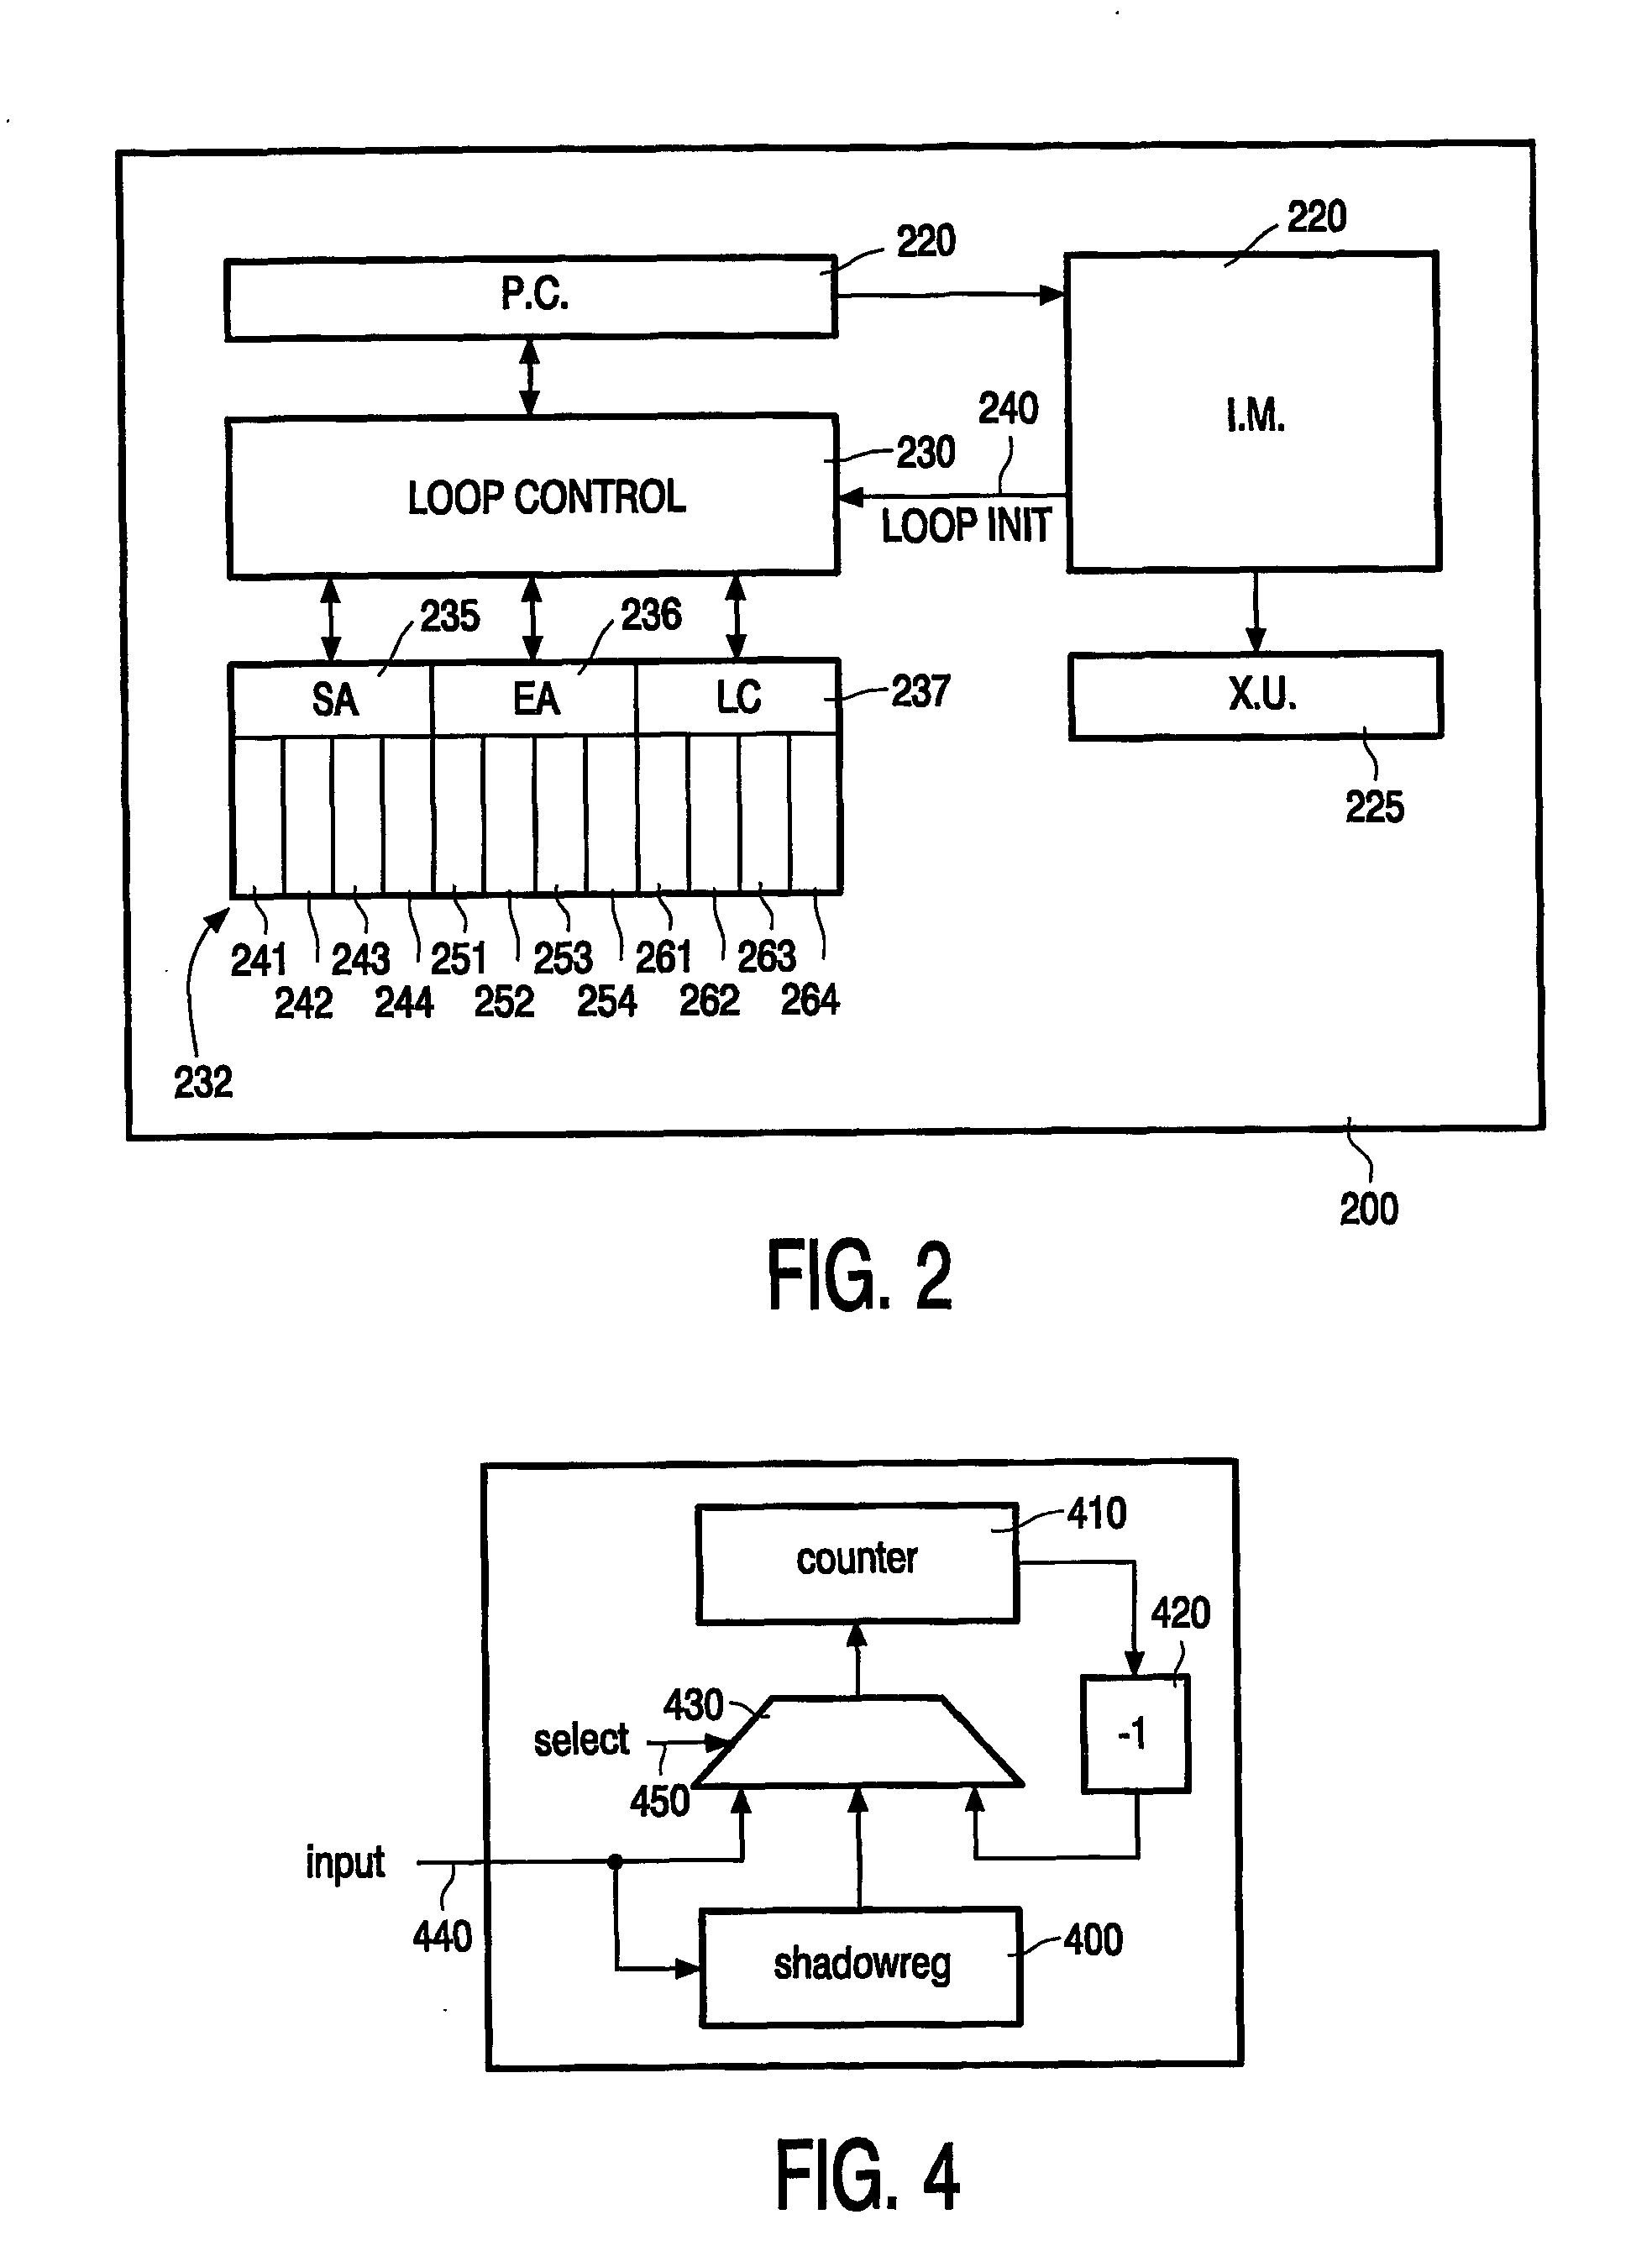 Loop control circuit for a data processor